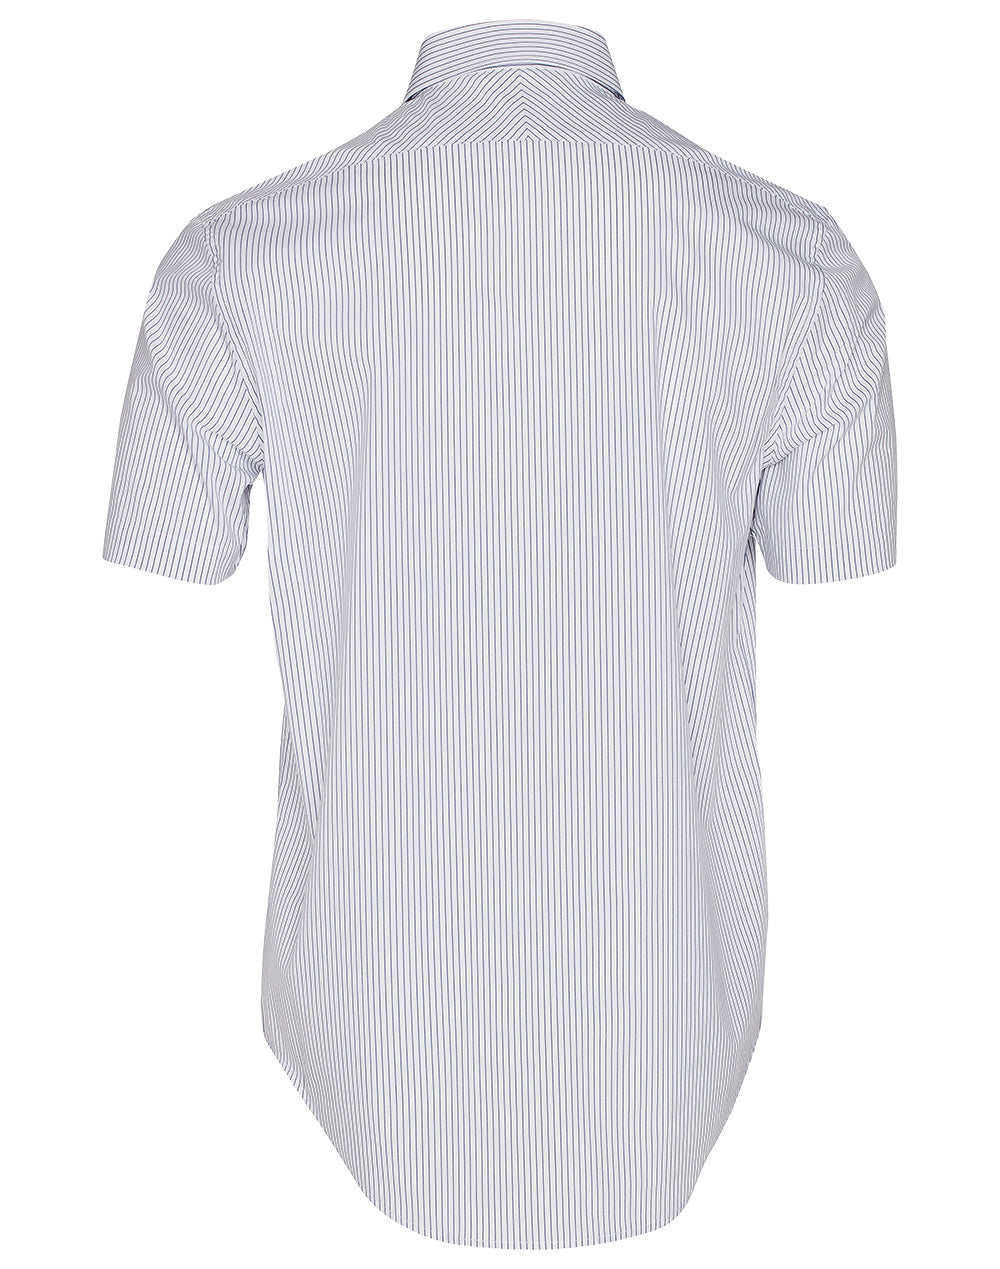 Winning Spirit -Men's Ticking Stripe Short Sleeve Shirt-M7200S